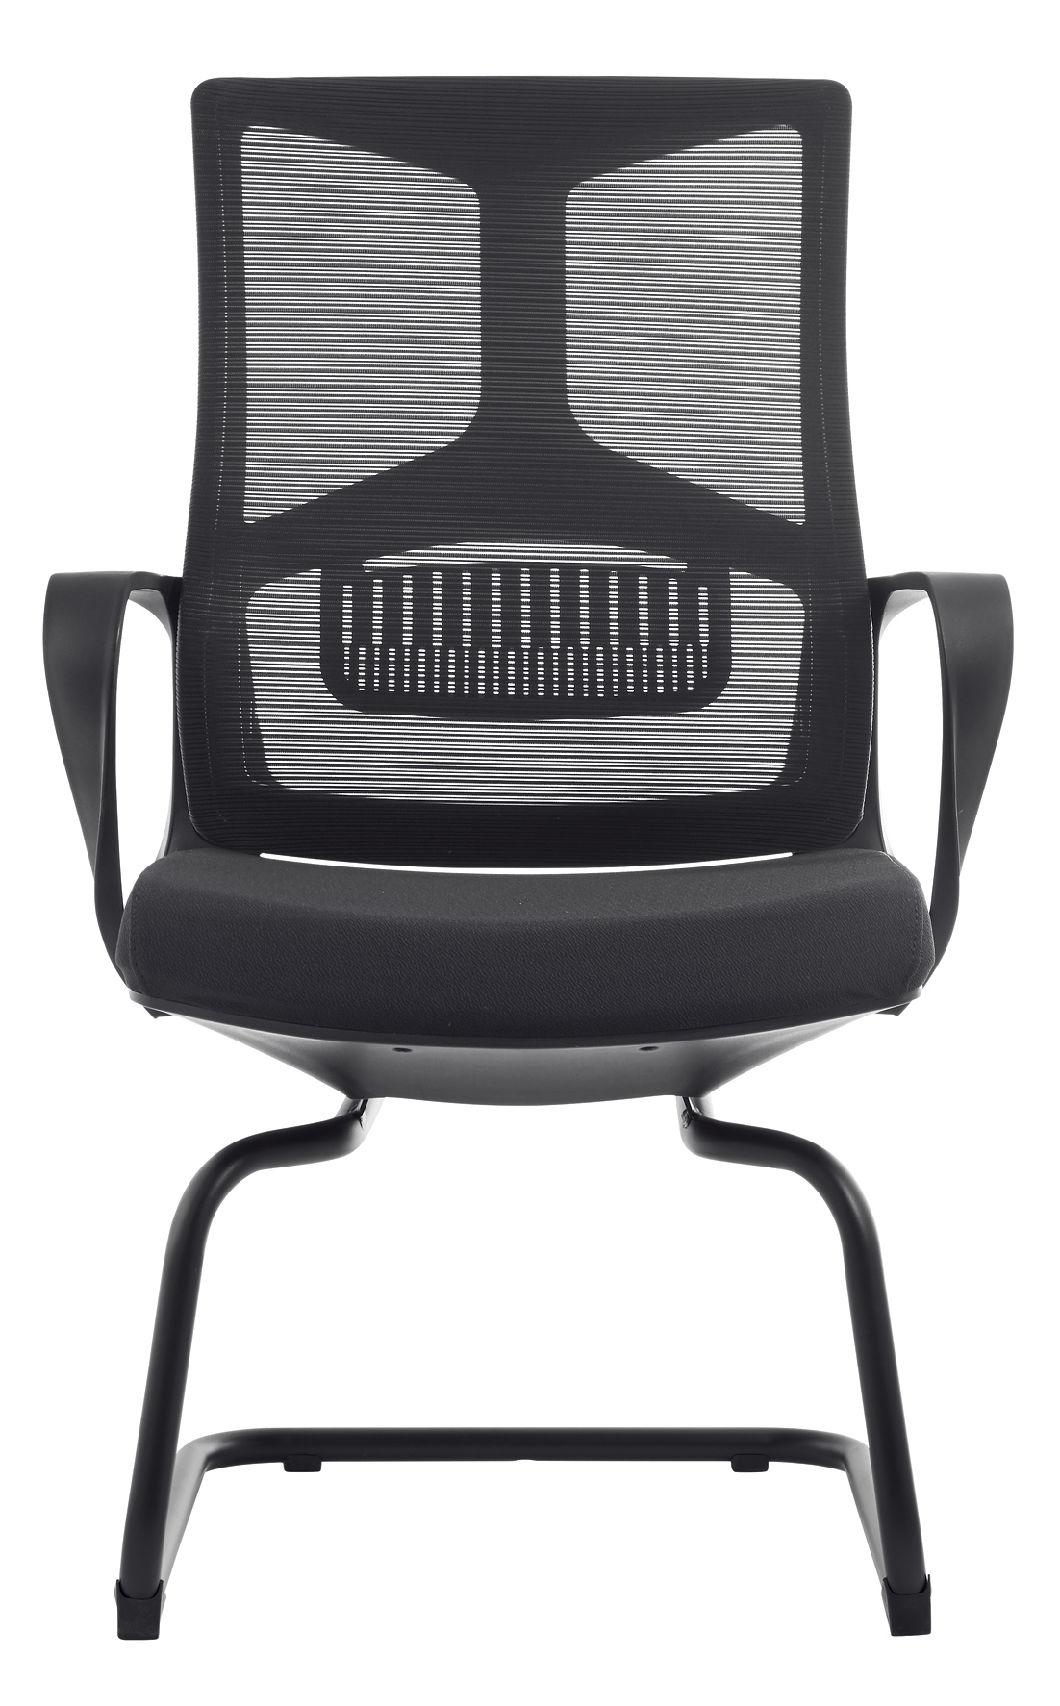 Factory Made Ergonomic Mesh Chair Good Quality